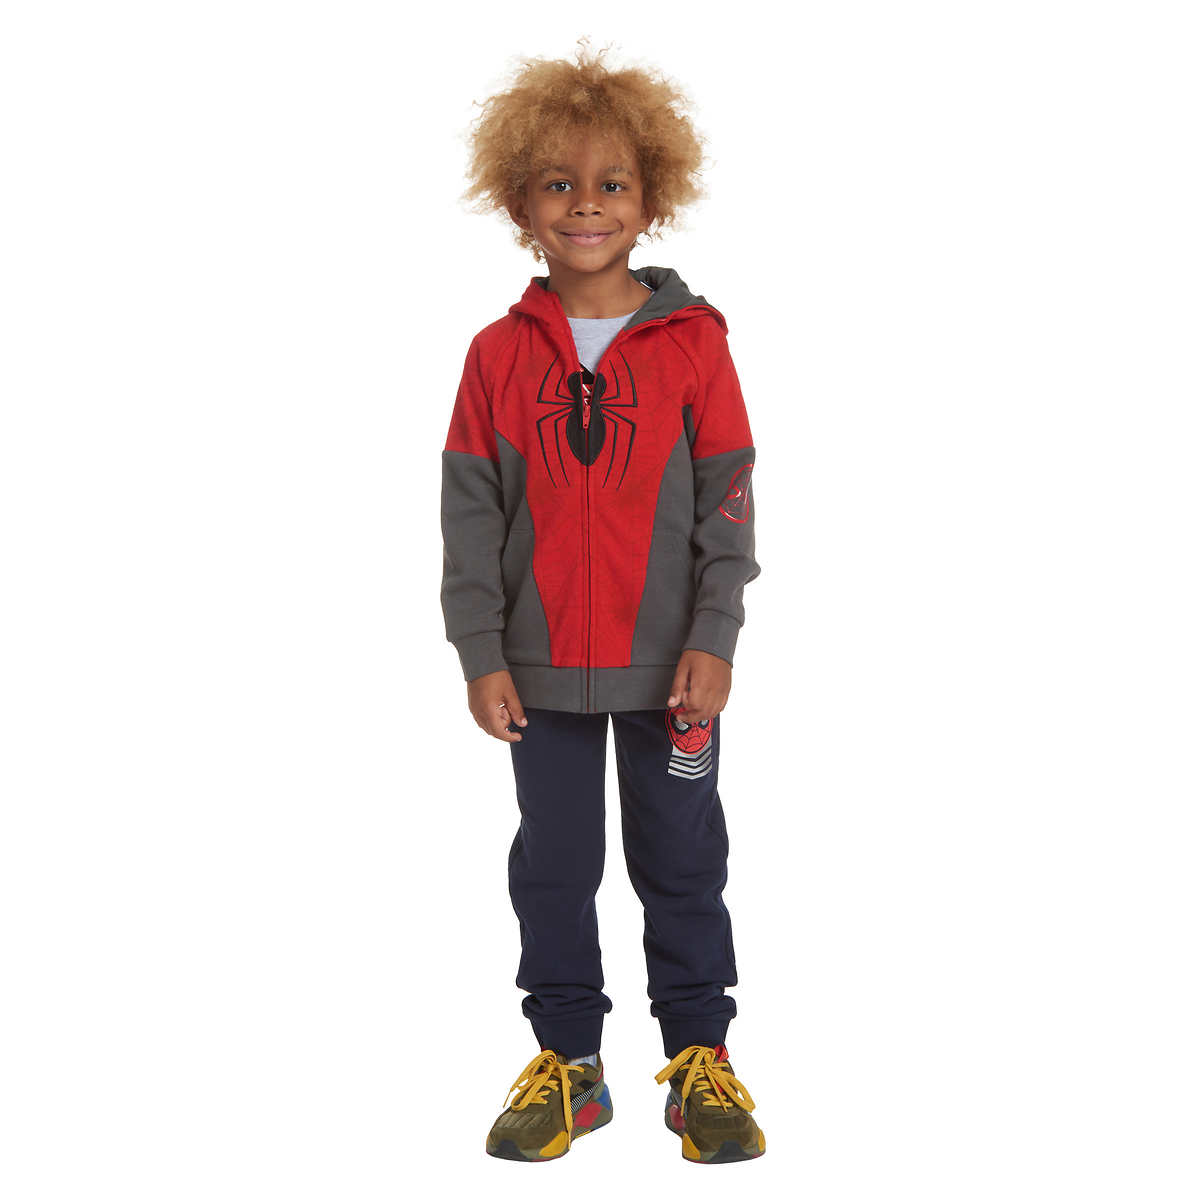 Marvel Spider-Man Boys Boxer Brief Size 4 – Marvelous Merchandise Online